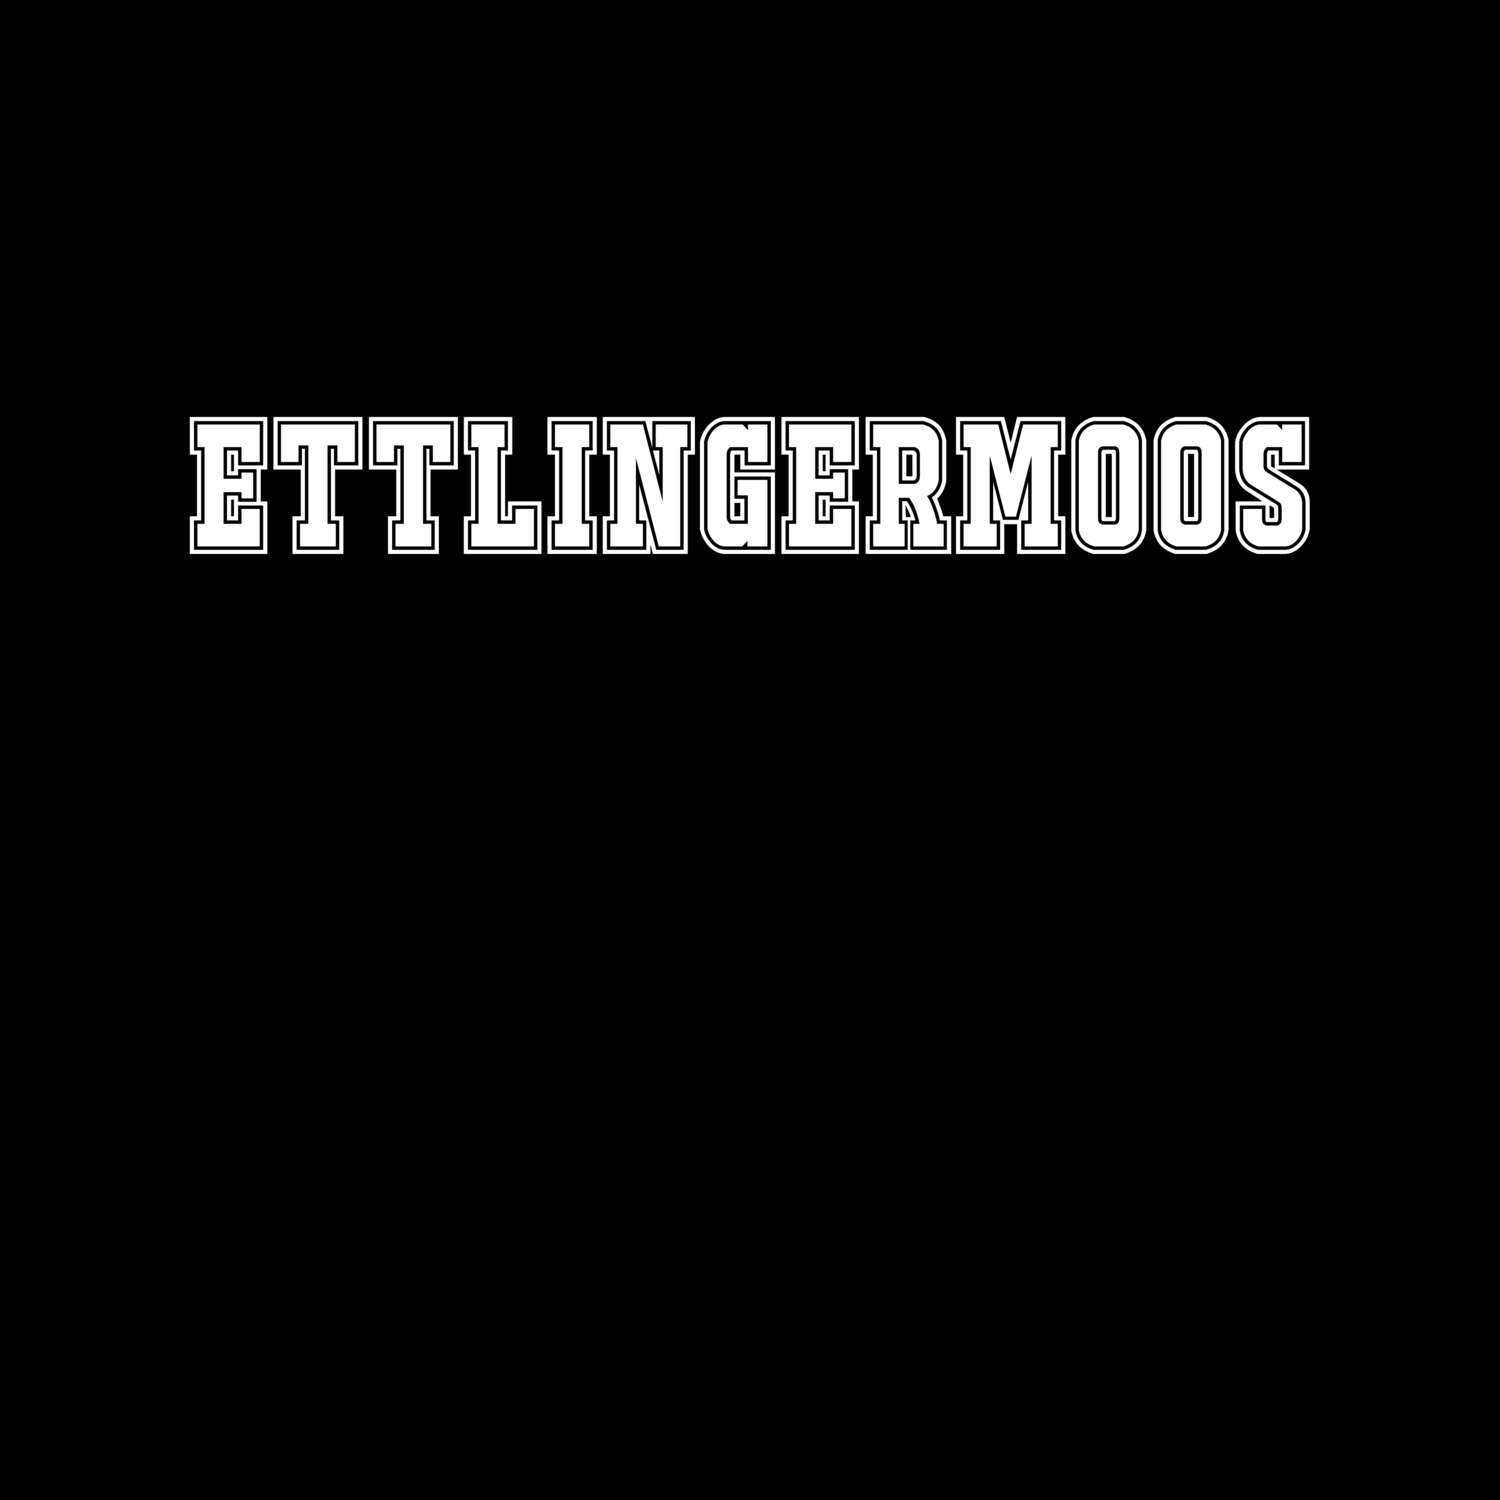 Ettlingermoos T-Shirt »Classic«